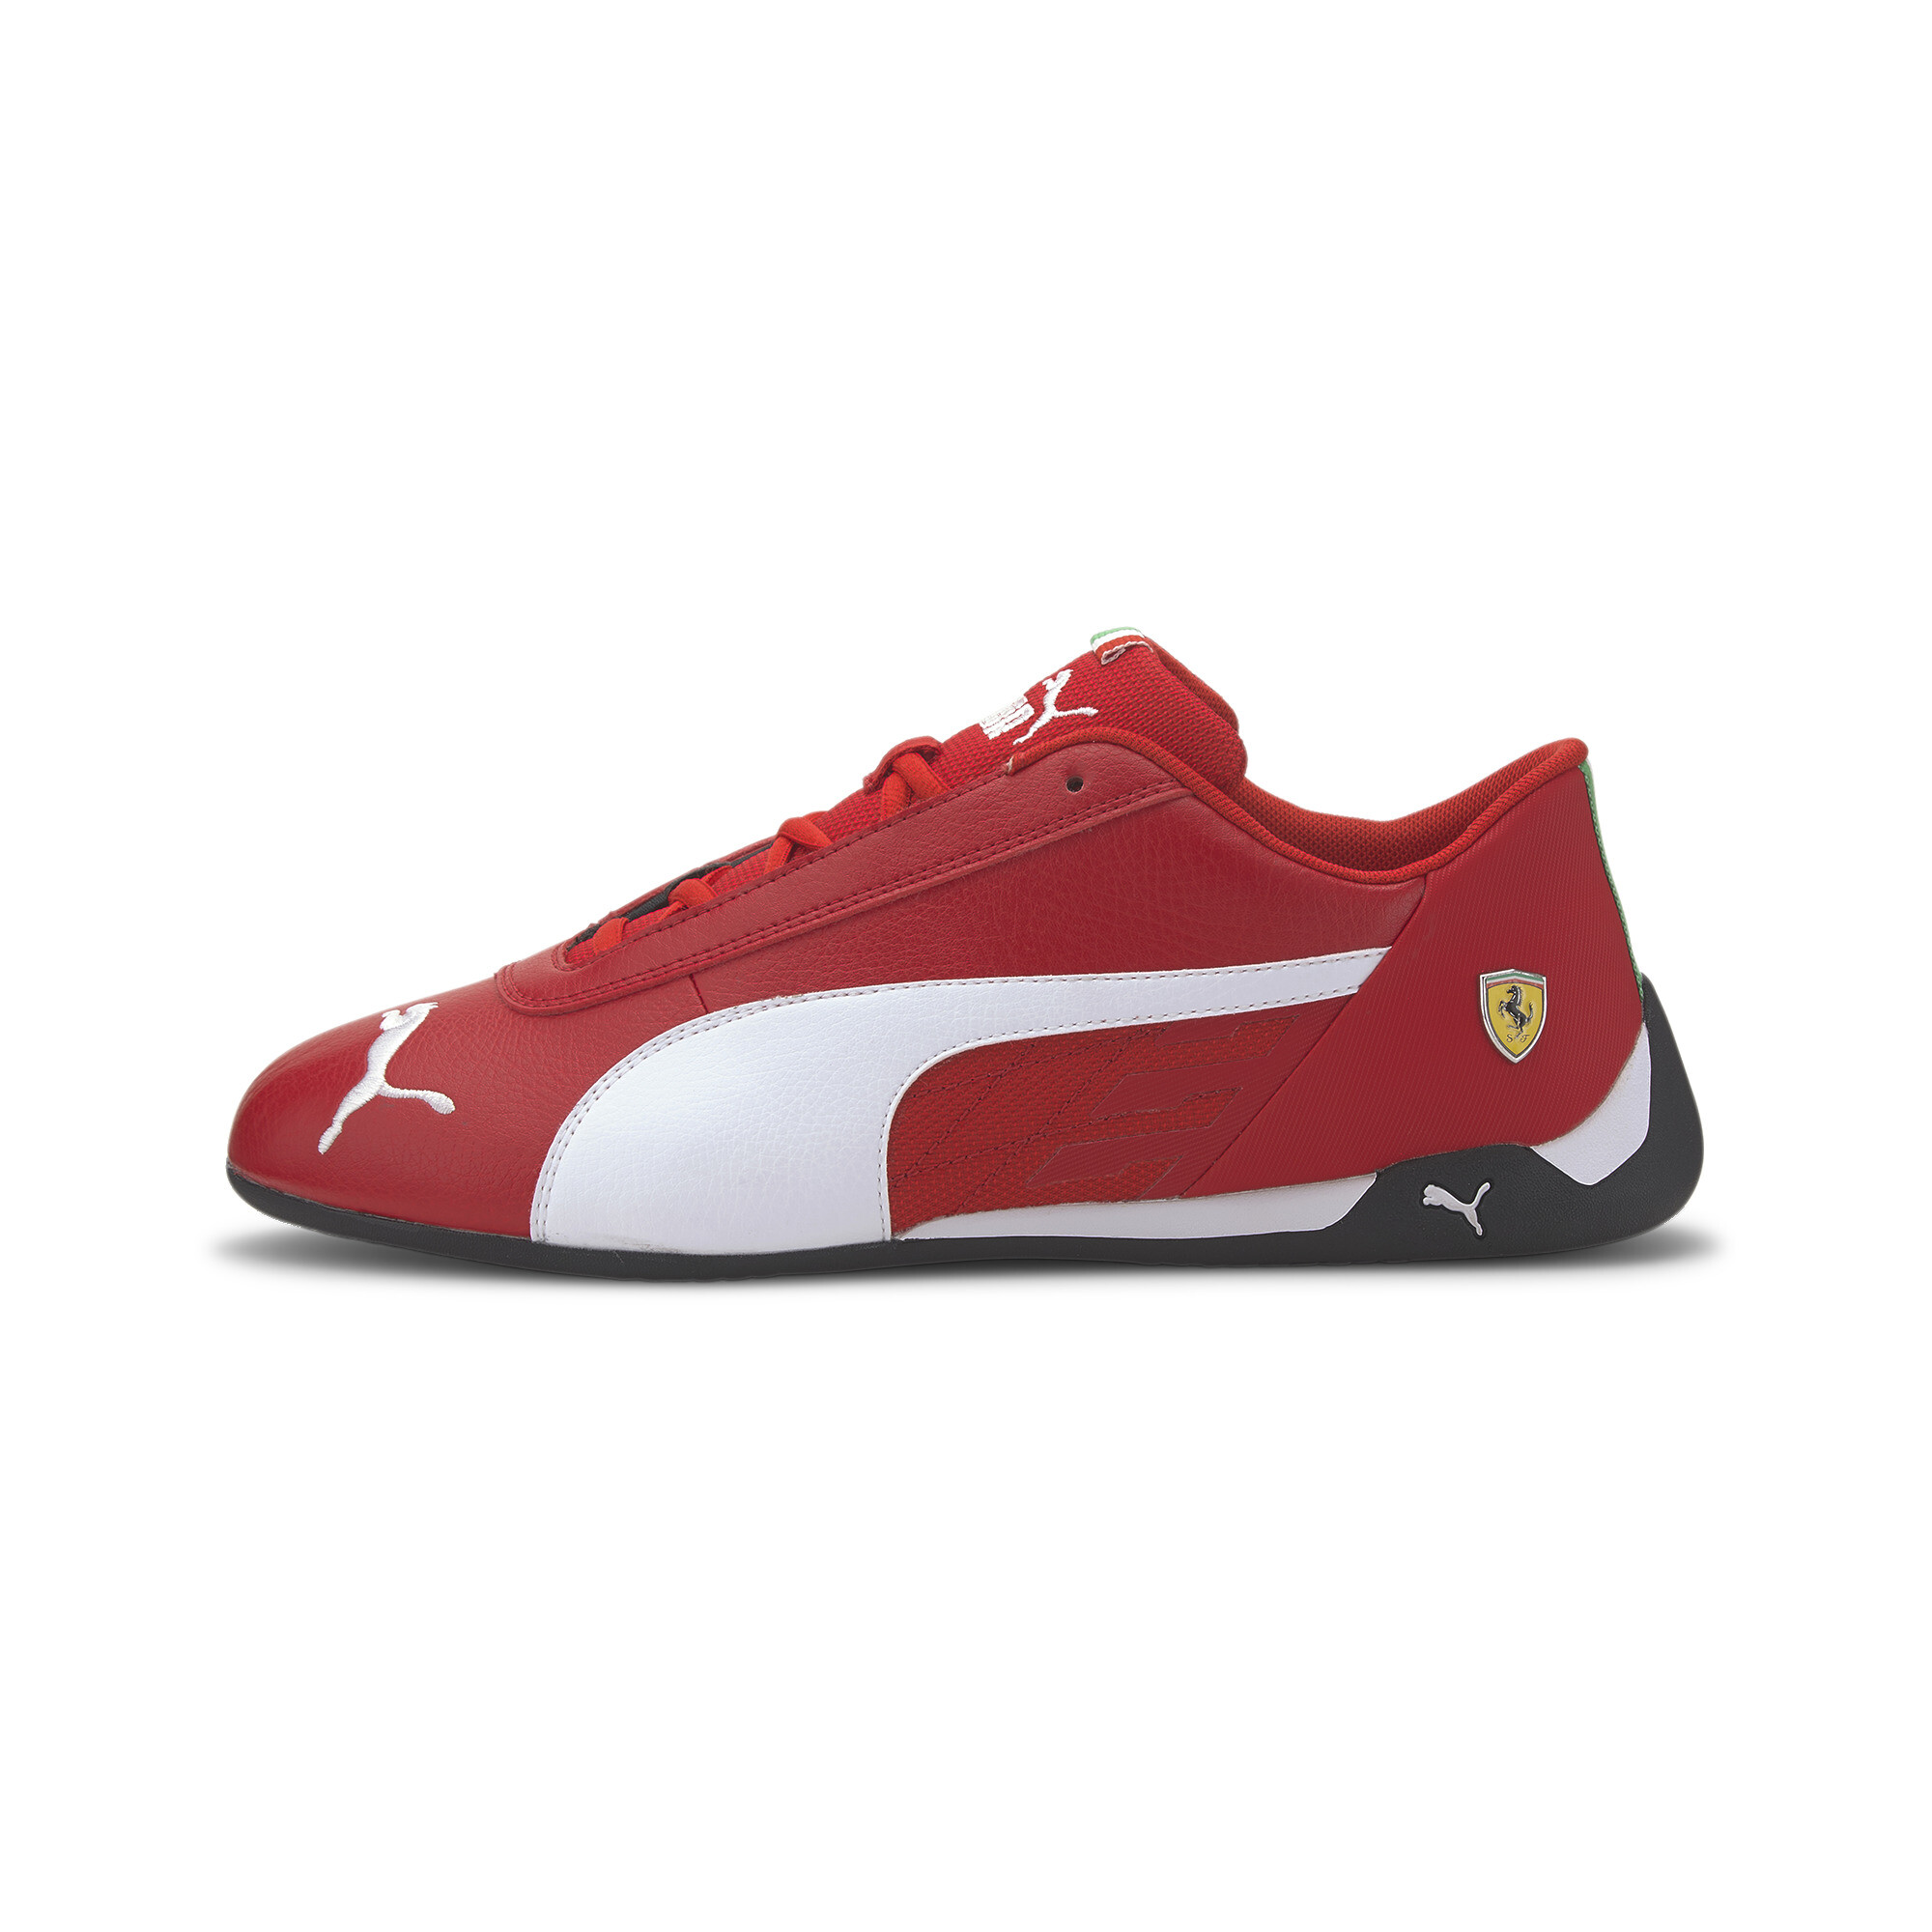 PUMA Men's Scuderia Ferrari R-Cat Motorsport Shoes | eBay